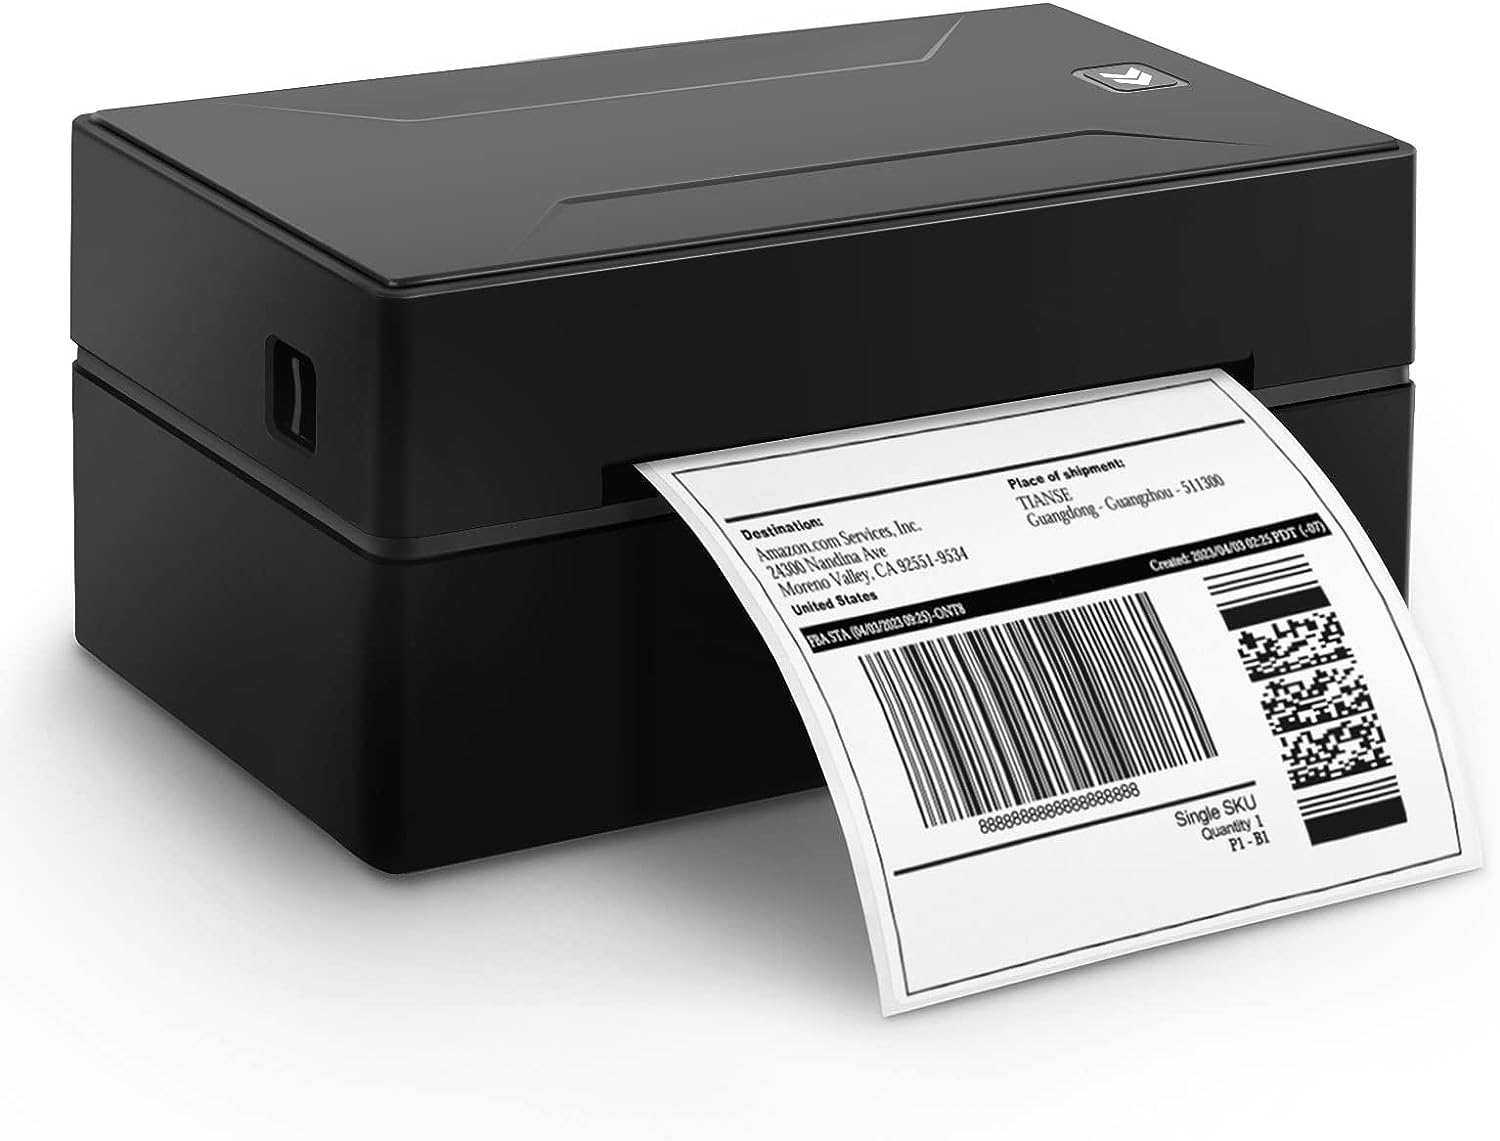 TIANSE Thermal Label Printer, Wireless 4x6 Shipping [...]